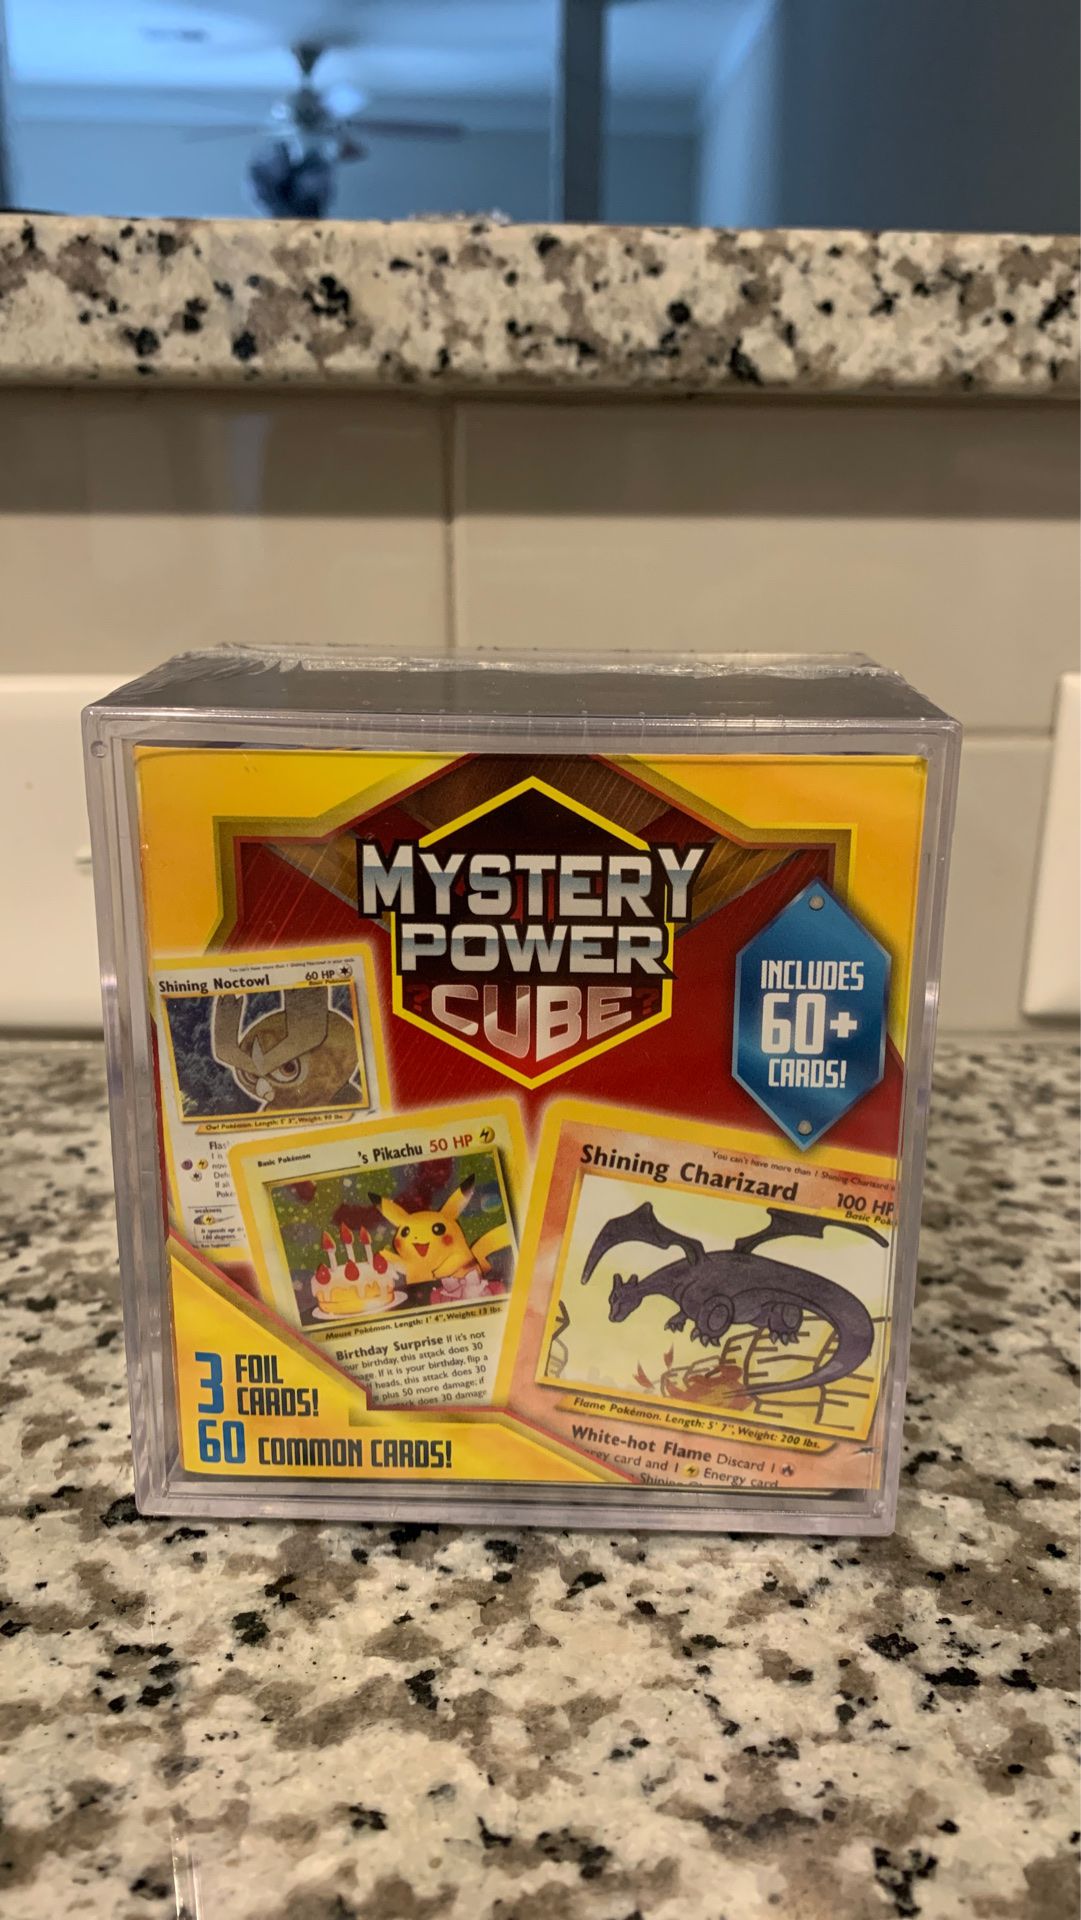 Pokemon Mystery Cube.